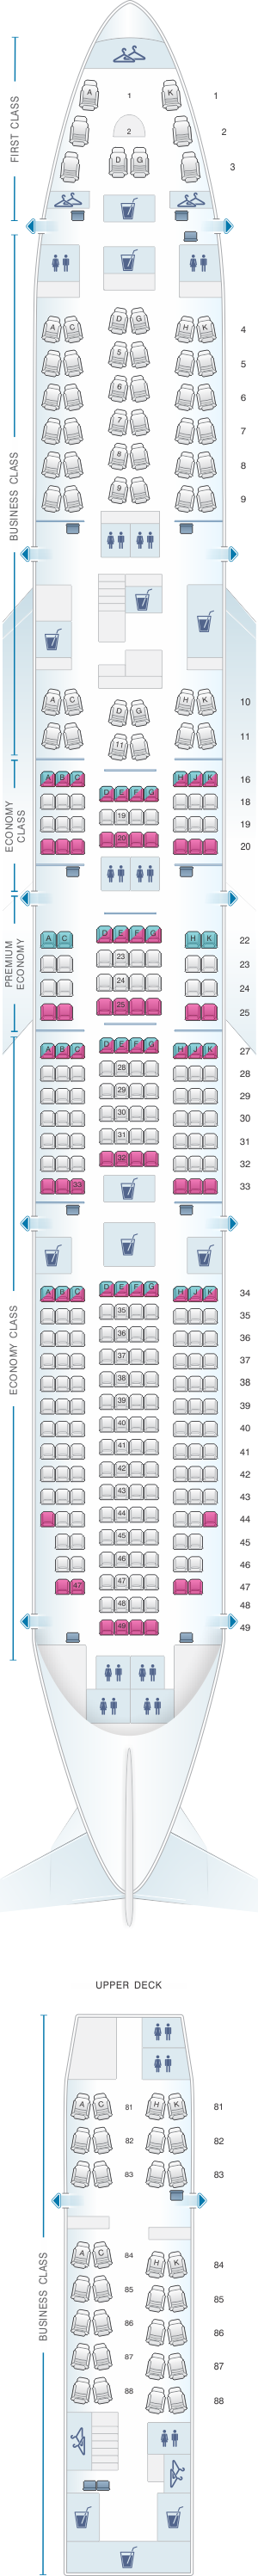 Seat map for Lufthansa Boeing B747-8 364pax